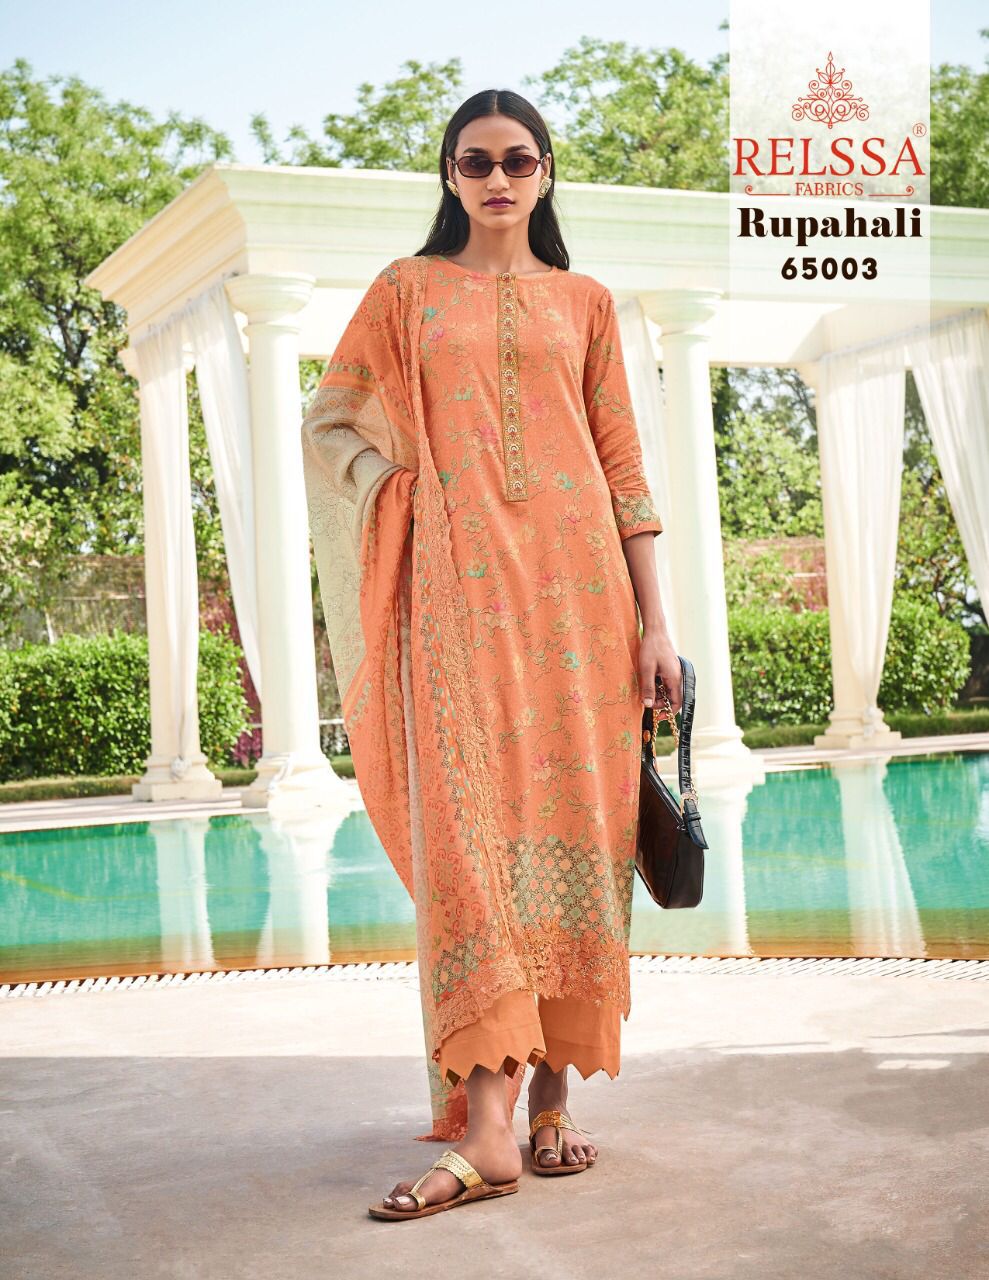 Relssa Fabrics Rupahali 65003